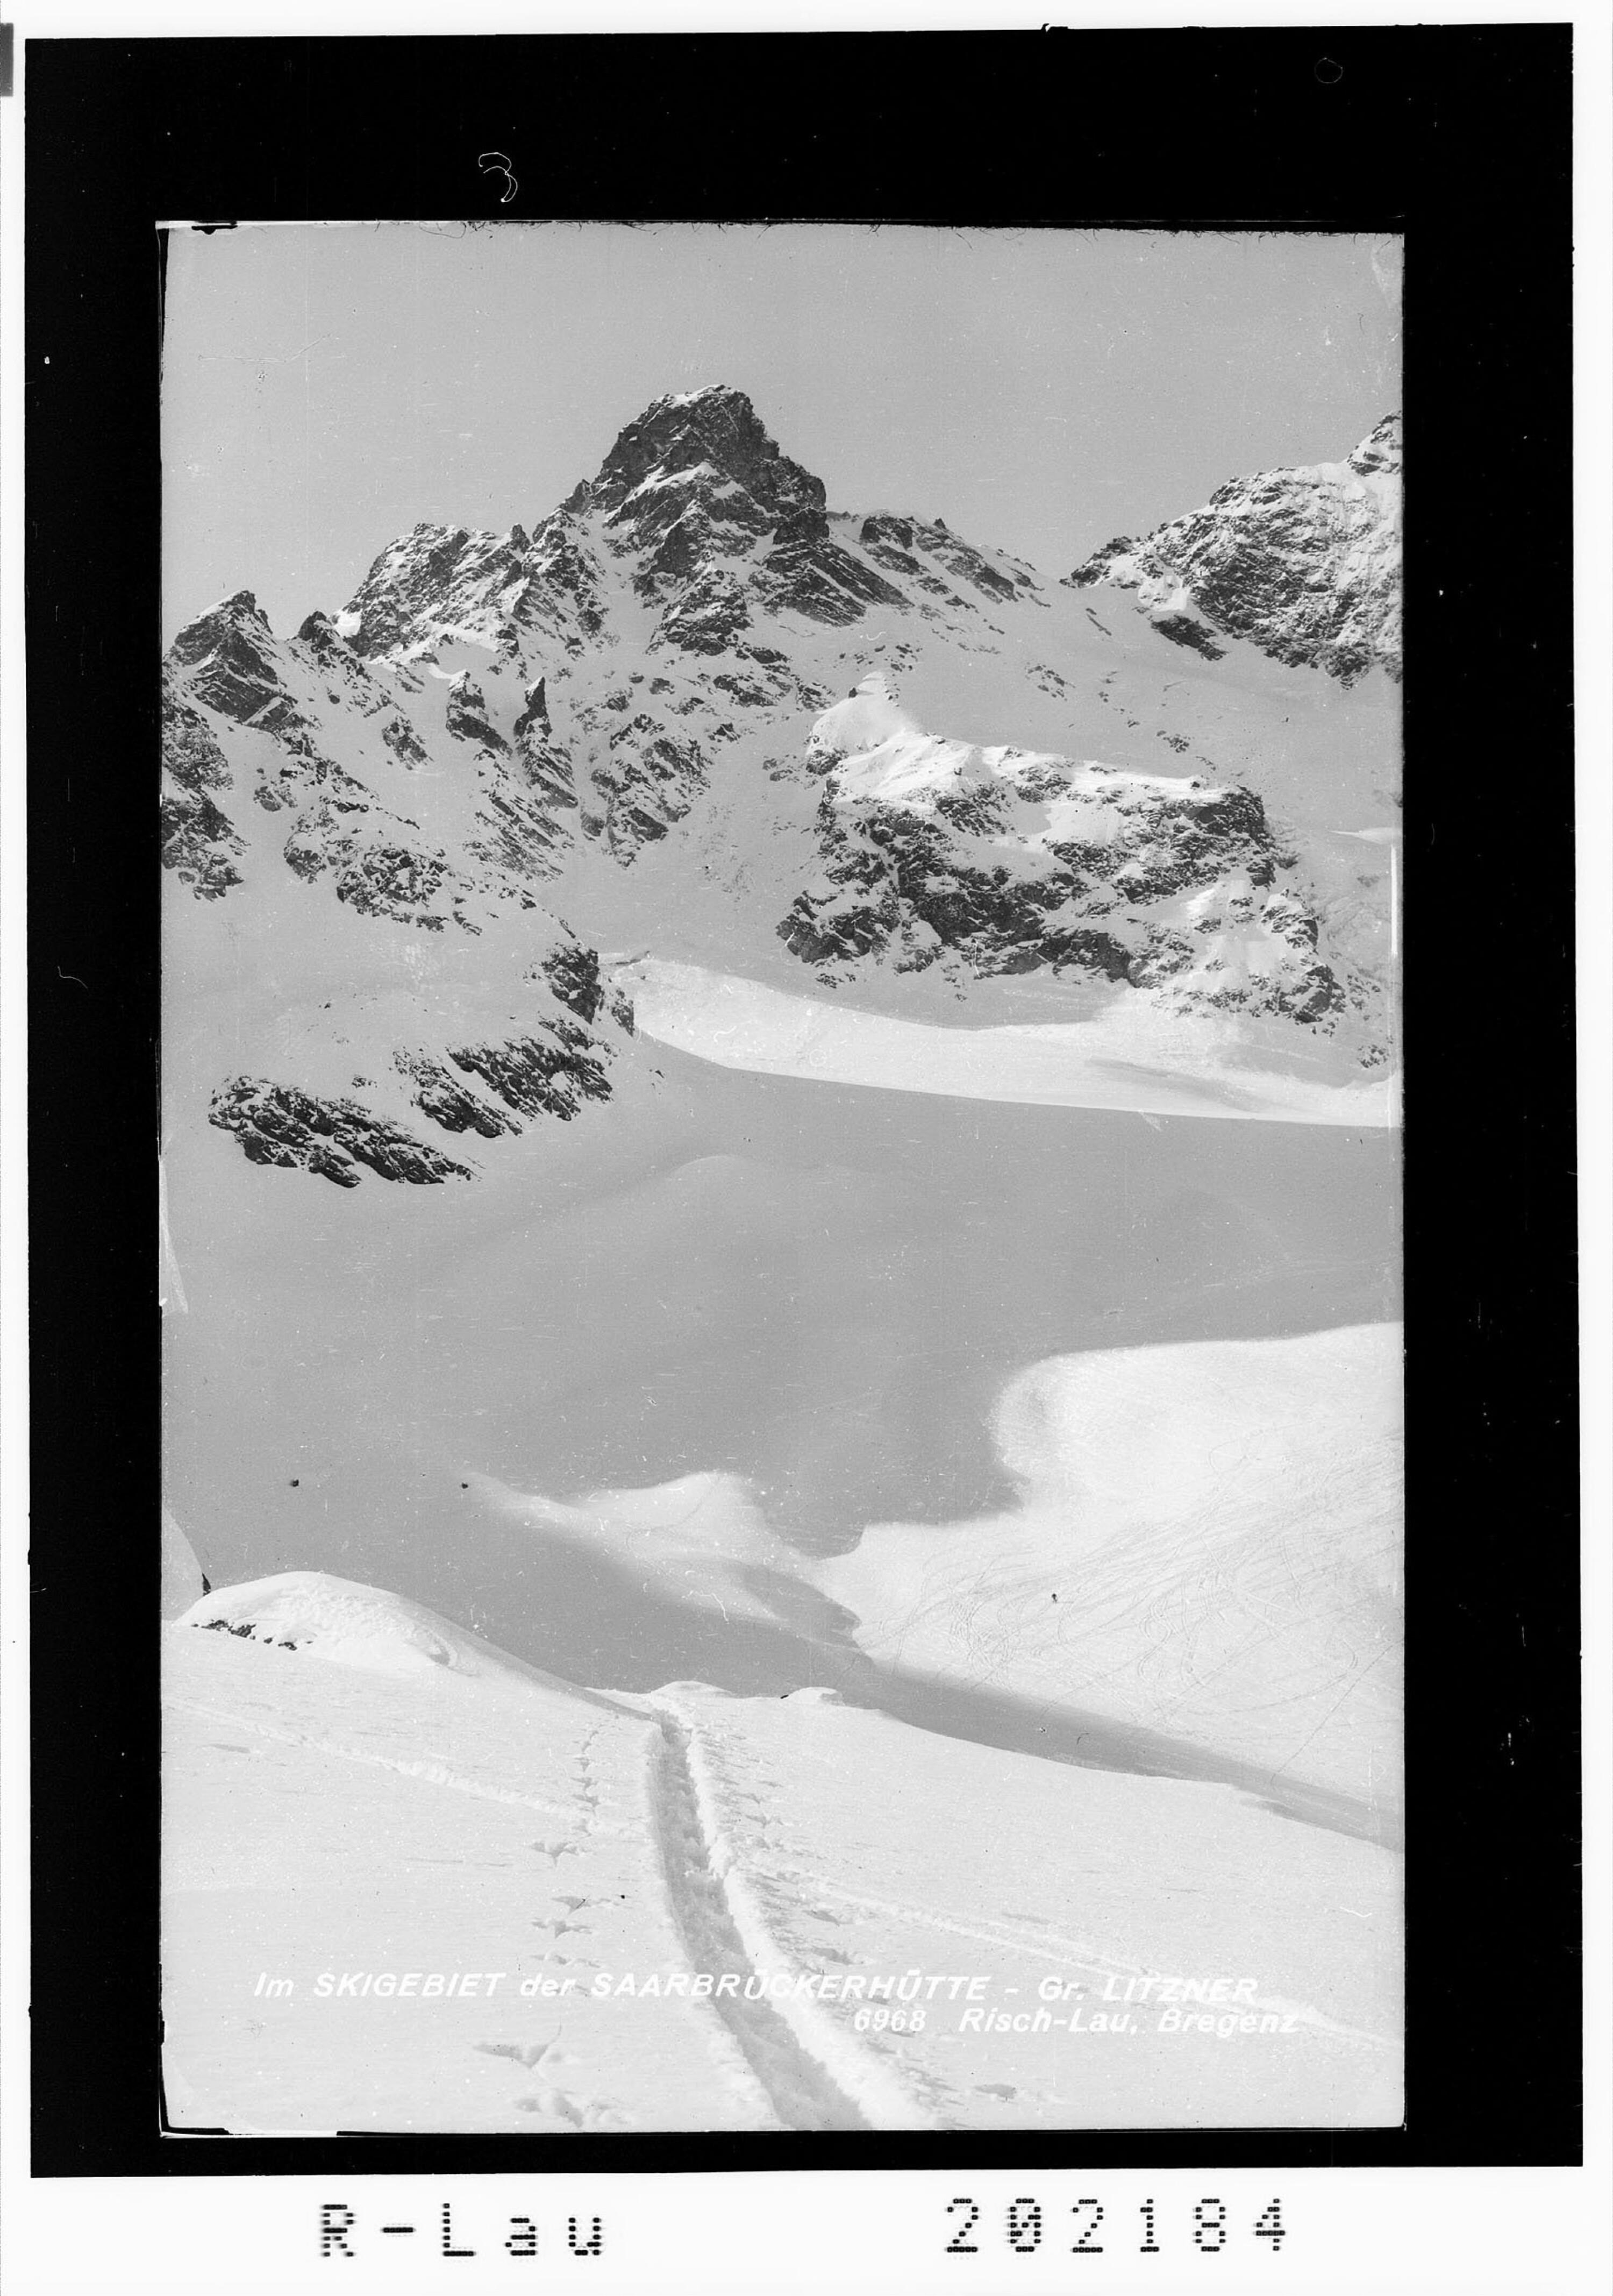 Im Skigebiet der Saarbrückerhütte - Grosser Litzner></div>


    <hr>
    <div class=